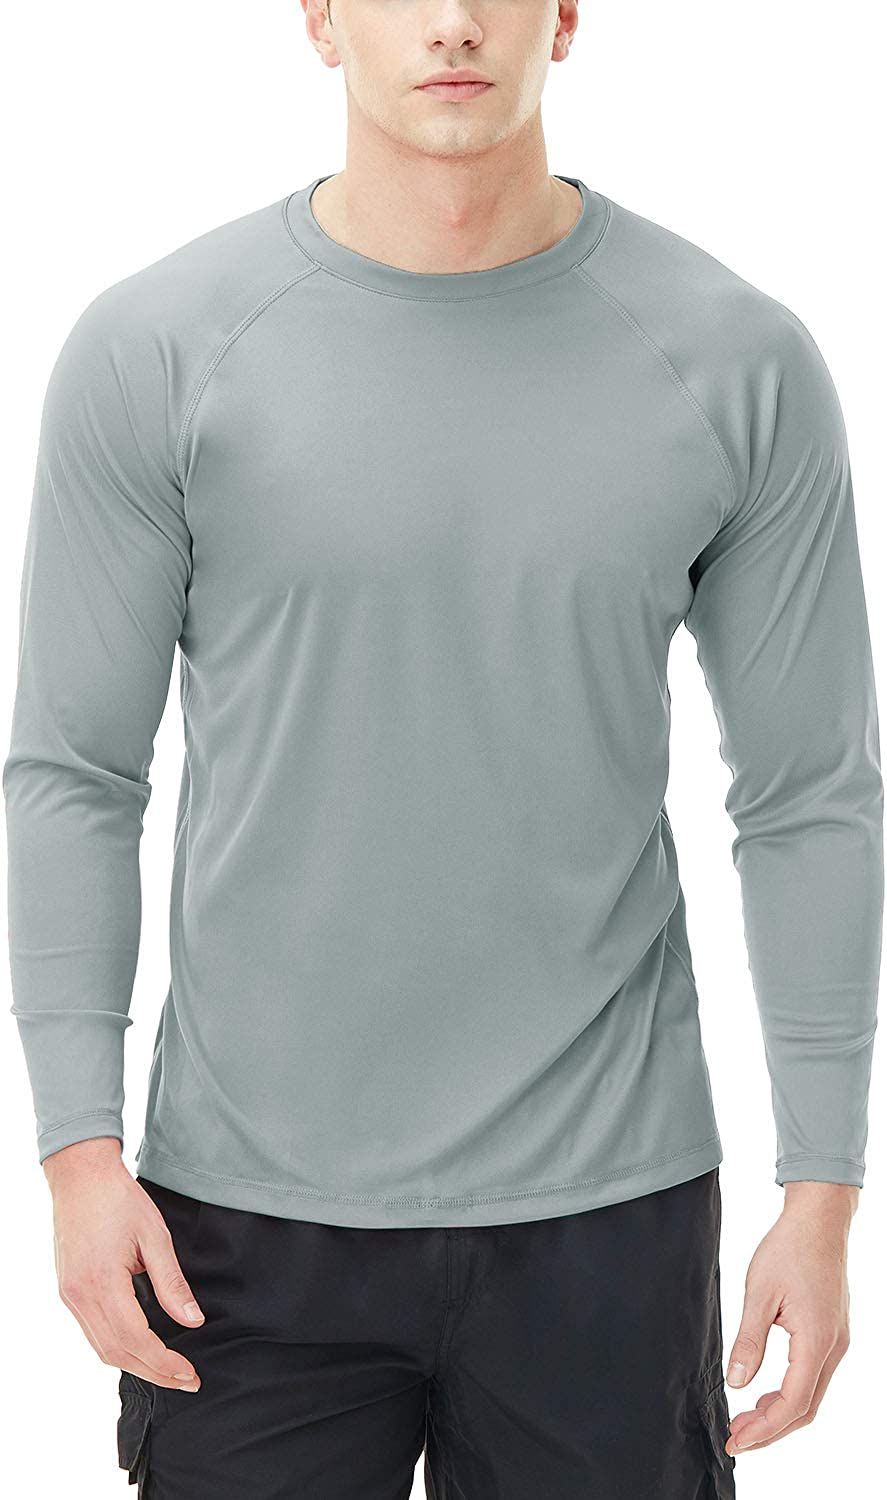 Loose-Fit Short Sleeve Shi Details about   TSLA 1 or 2 Pack Men's Rashguard Swim Shirts UPF 50 